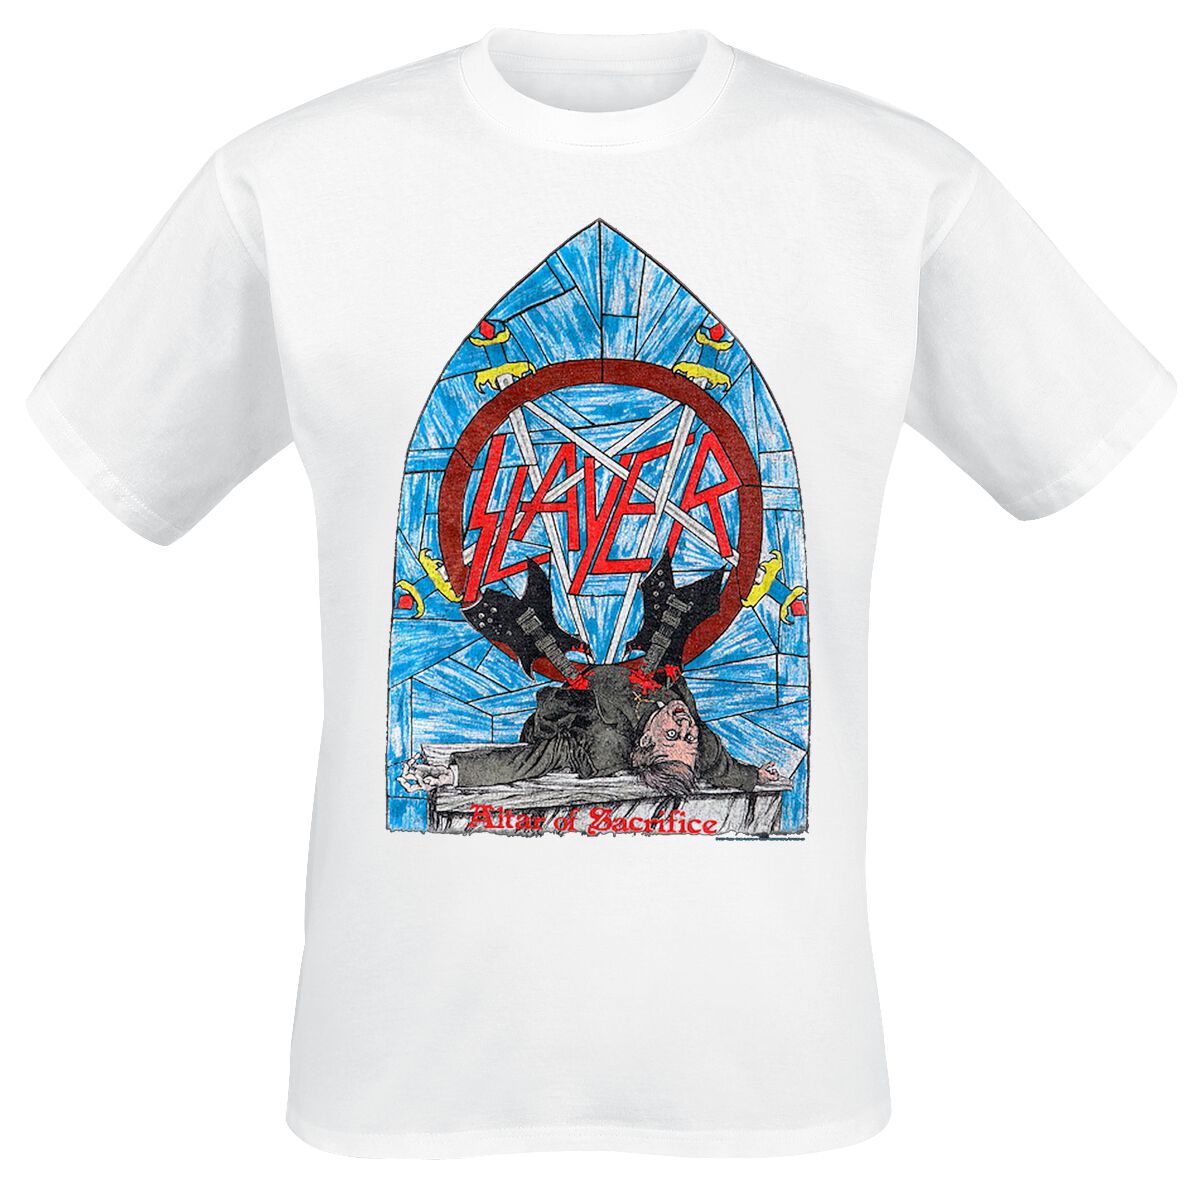 Slayer Altar Of Sacrifice T-Shirt white